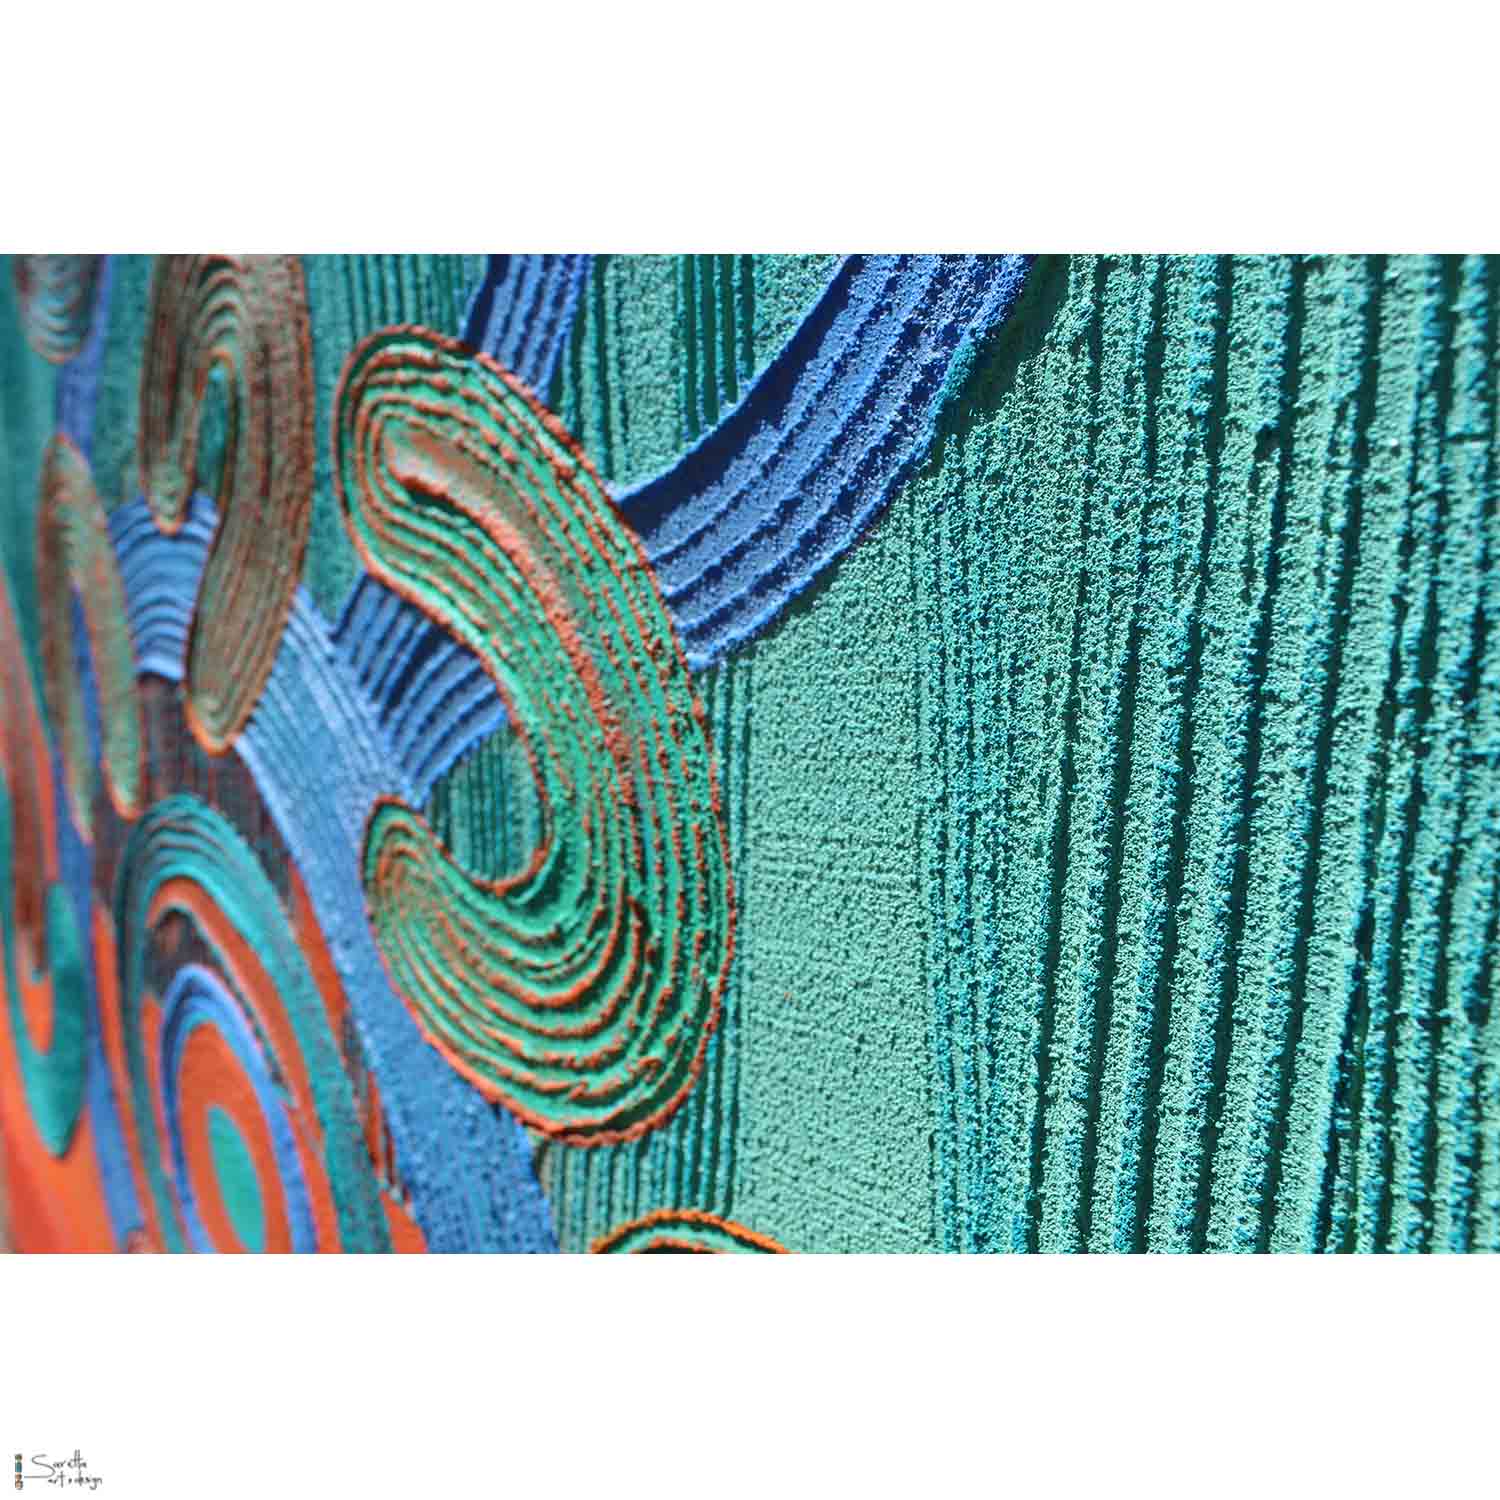 Turool Anambo – Healing Place series 2 - Saretta Art & Design